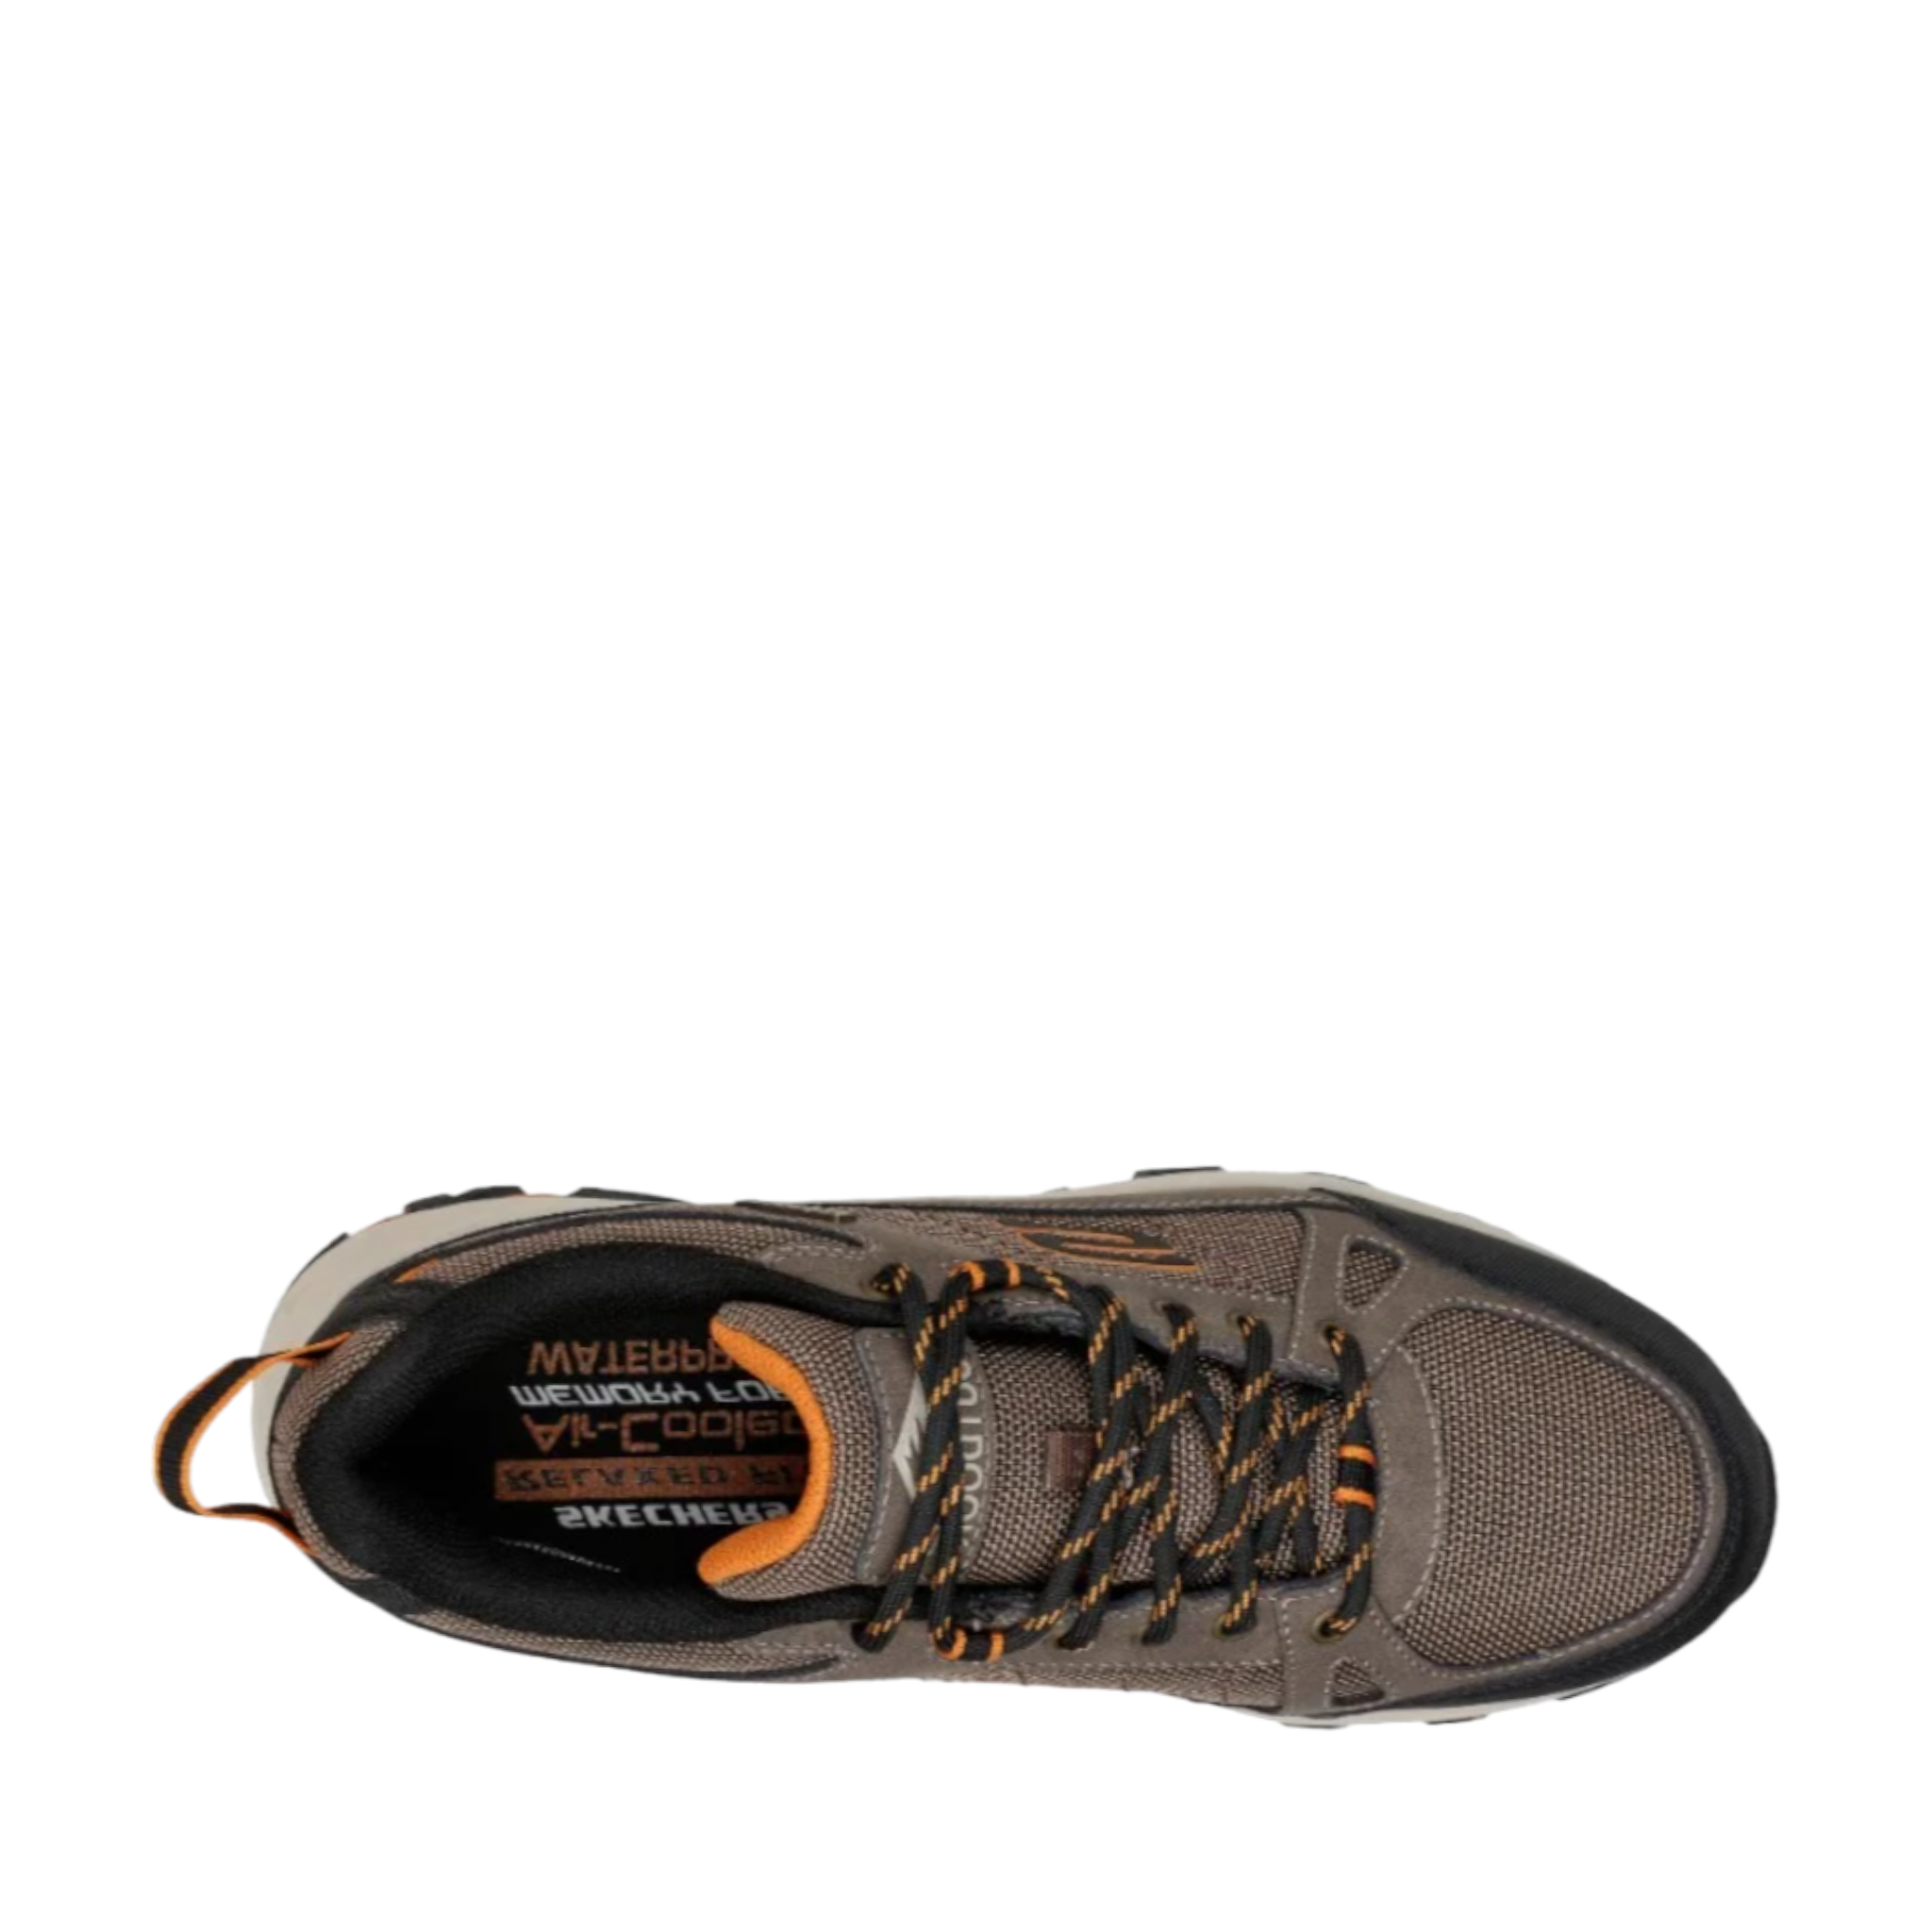 Cormack - shoe&me - Skechers - Shoes - Mens, Sneakers